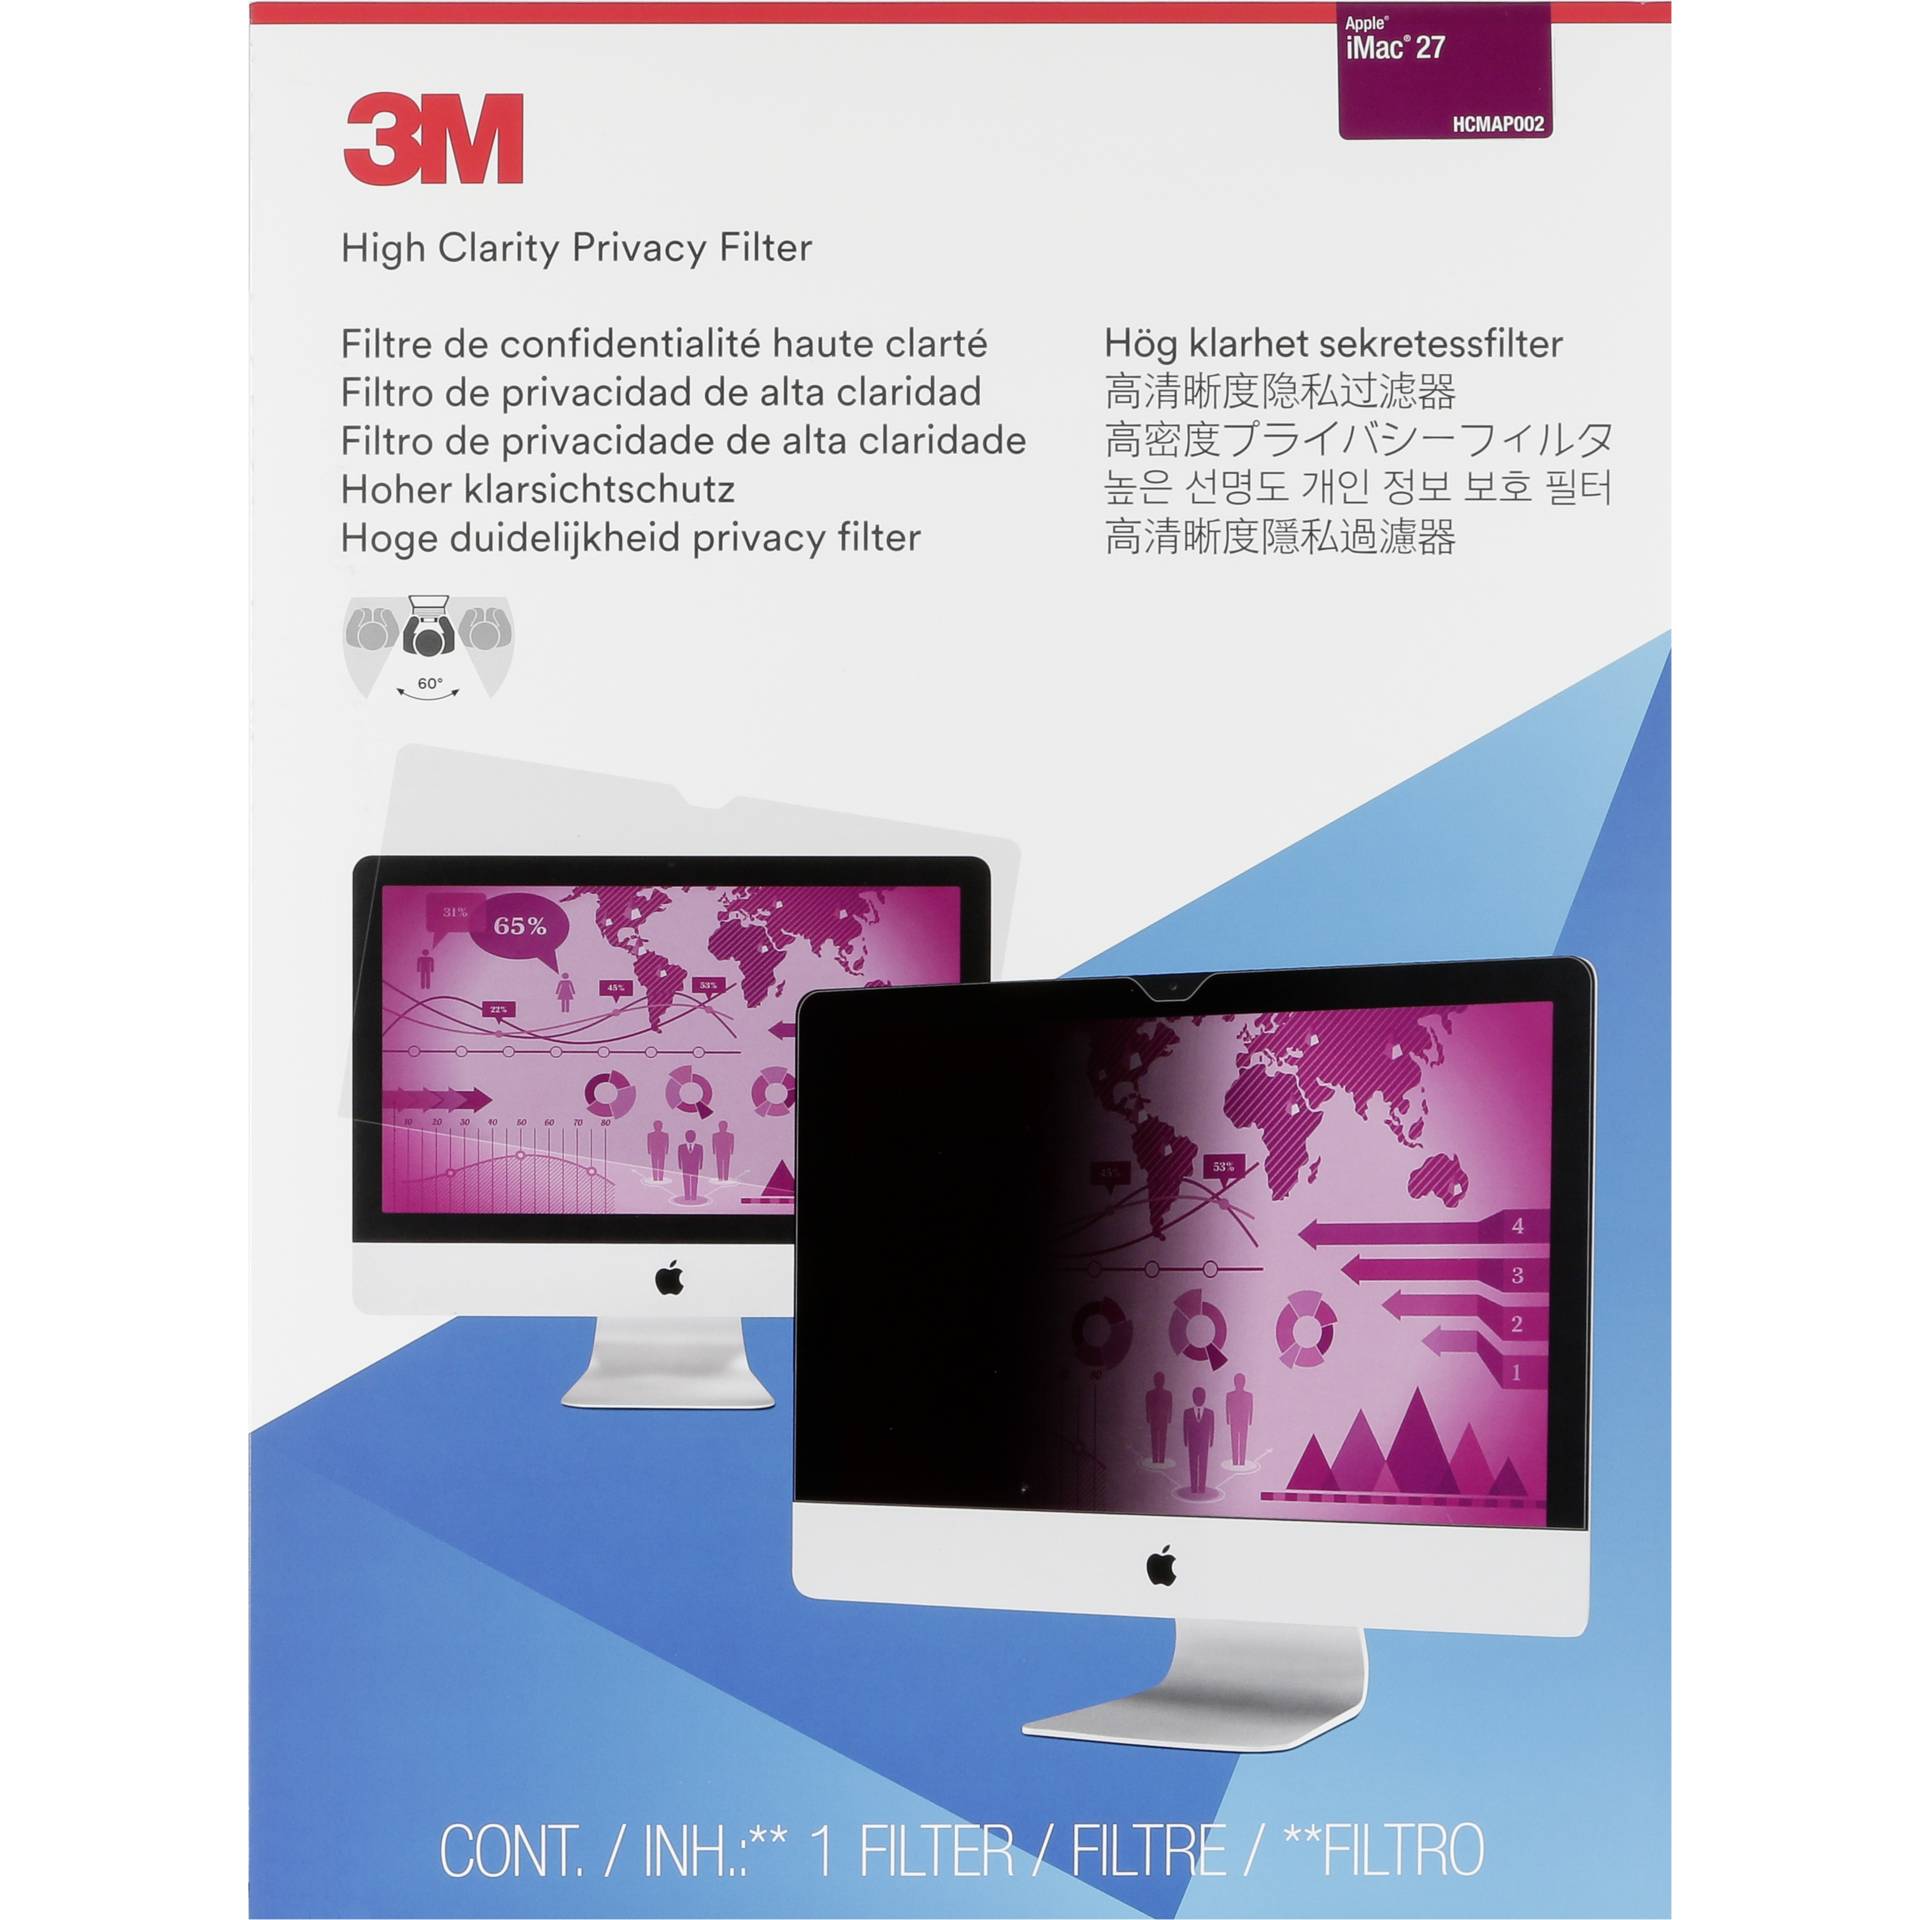 3M HCMAP002 filtro privacy High Clarity per Apple iMac 27